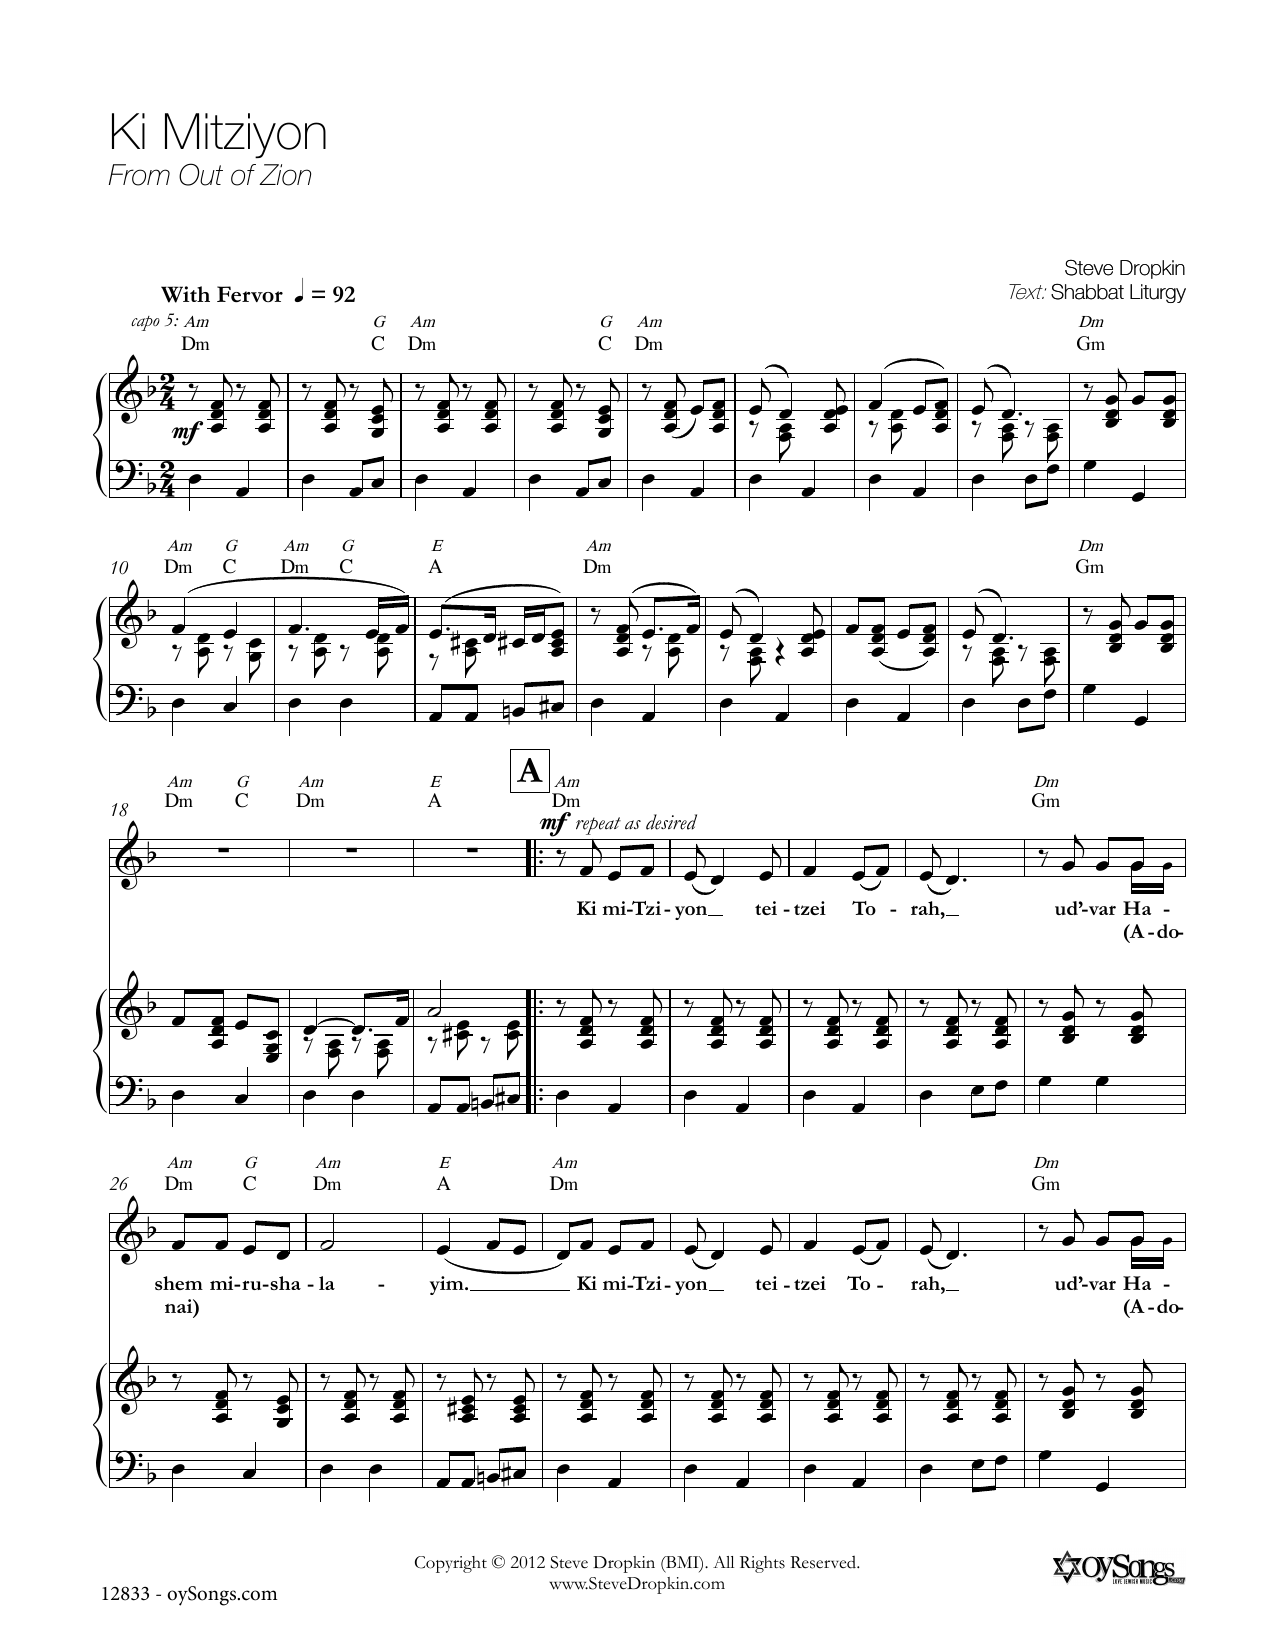 Steve Dropkin Ki Mitziyon Sheet Music Notes & Chords for Melody Line, Lyrics & Chords - Download or Print PDF